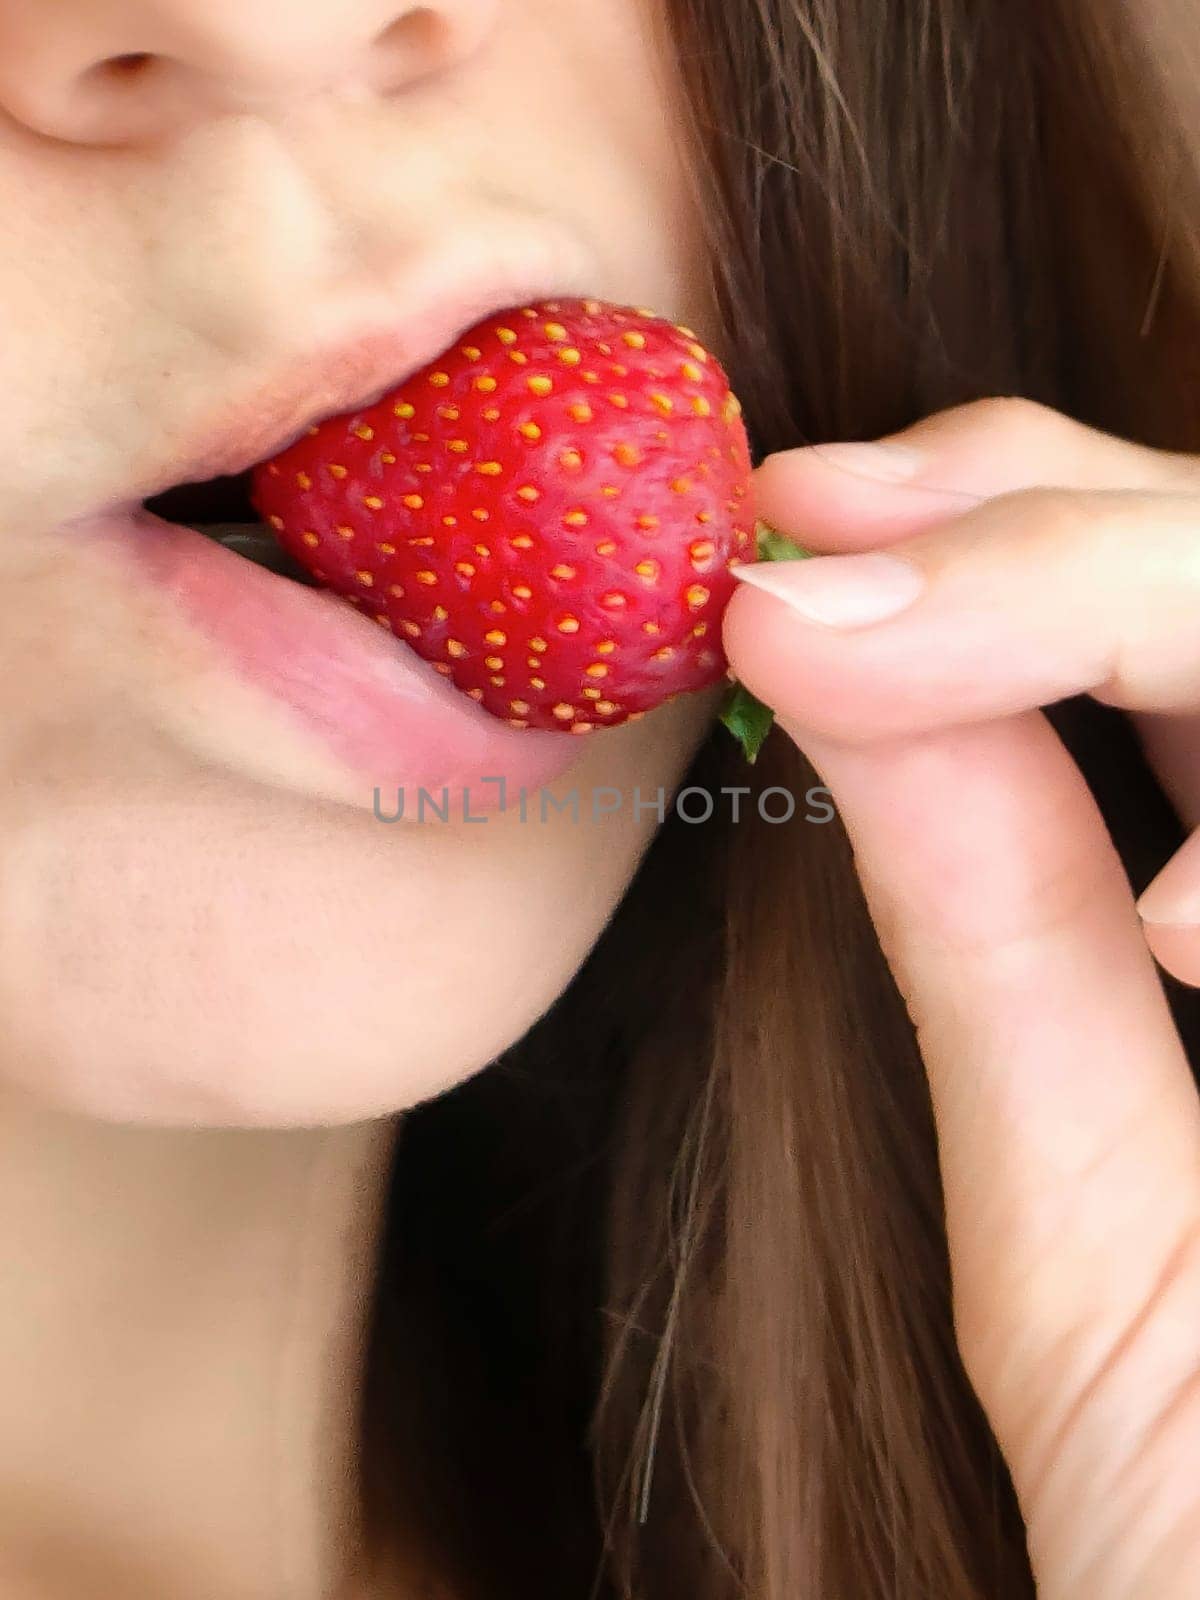 Girl bites strawberry, sensual lips and strawberry close-up